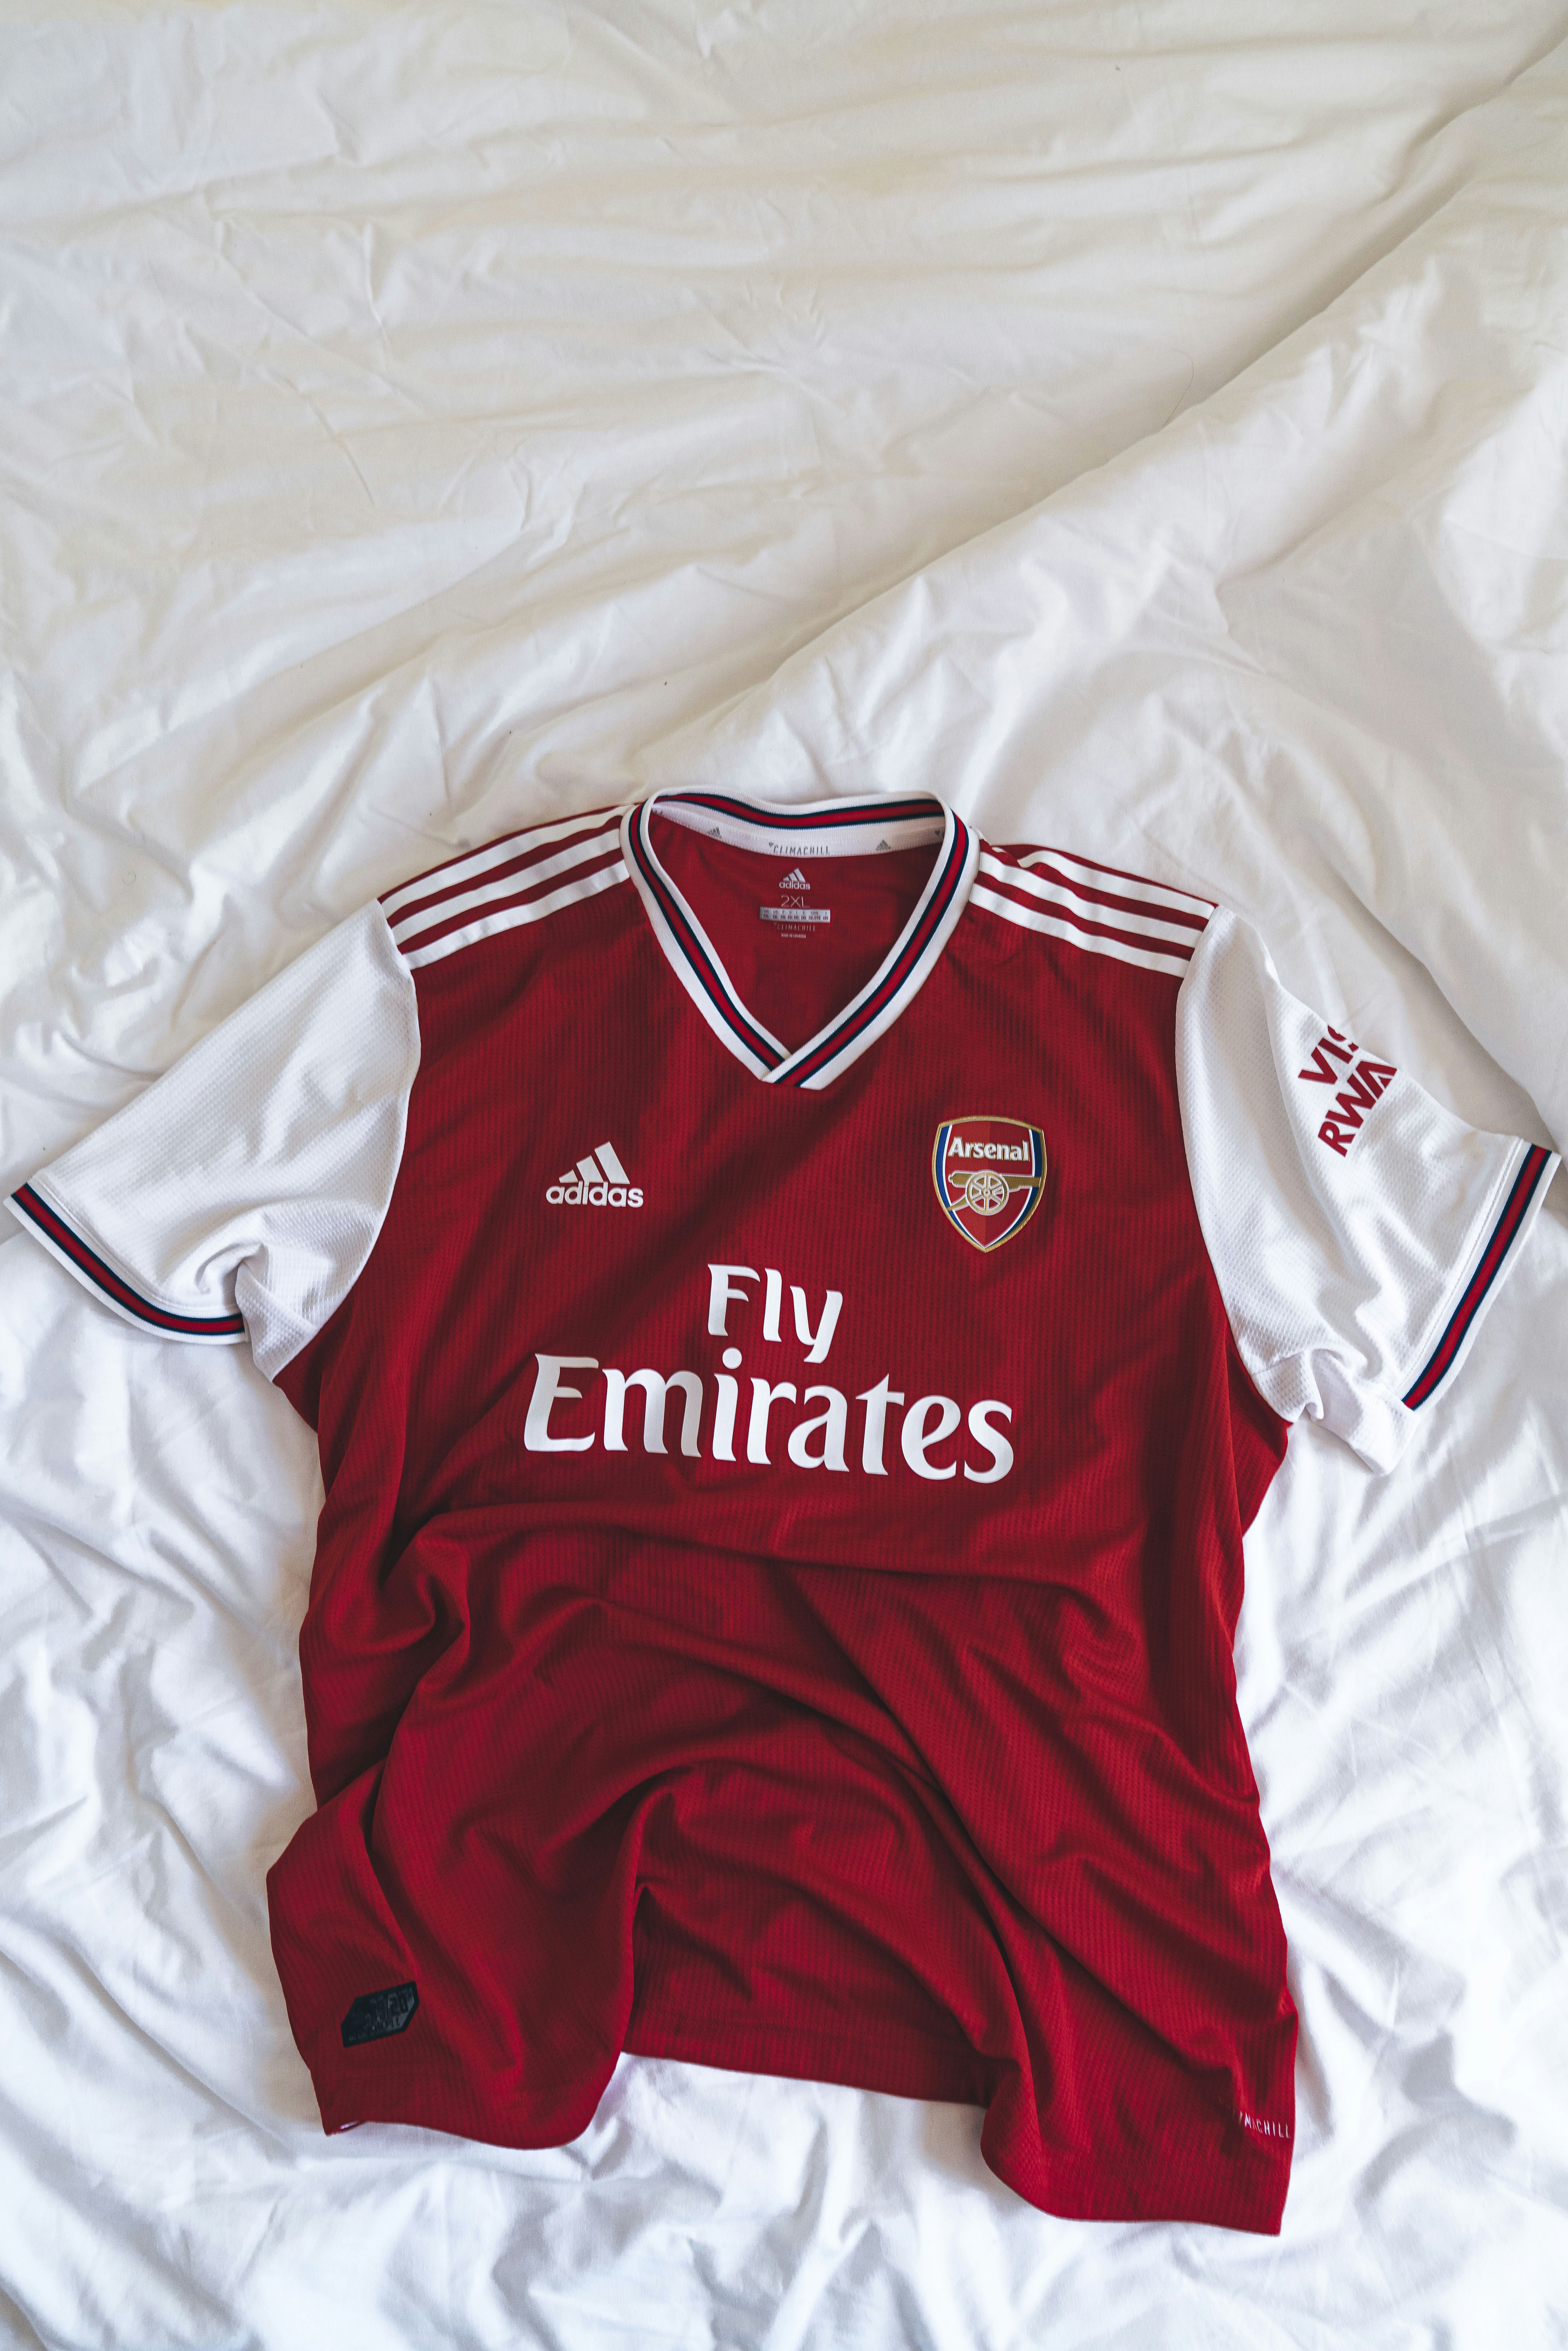 fly emirates arsenal jersey